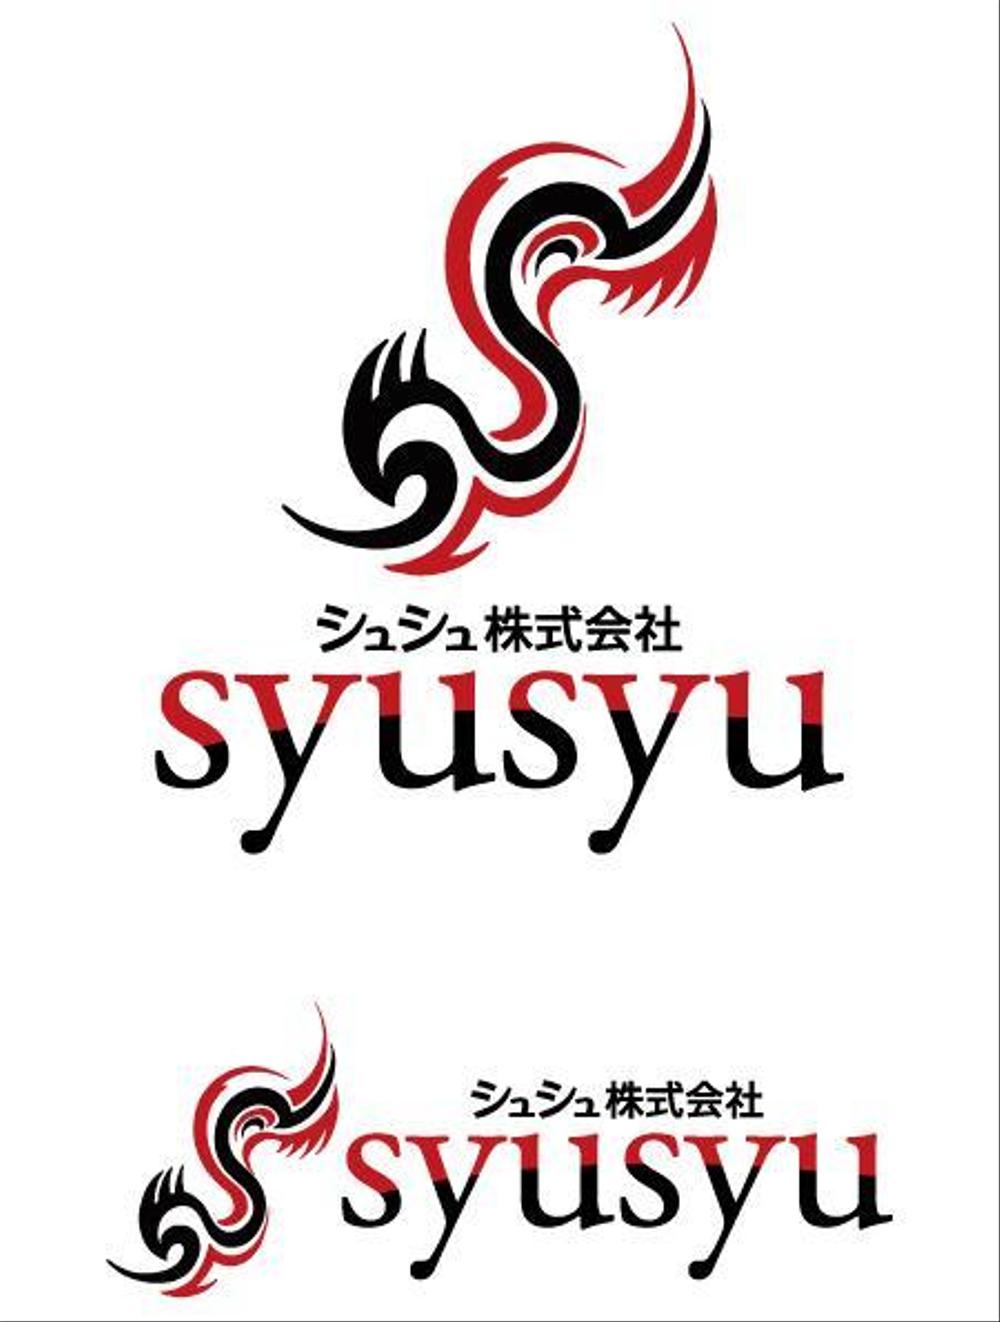 syusyu_logomark.jpg